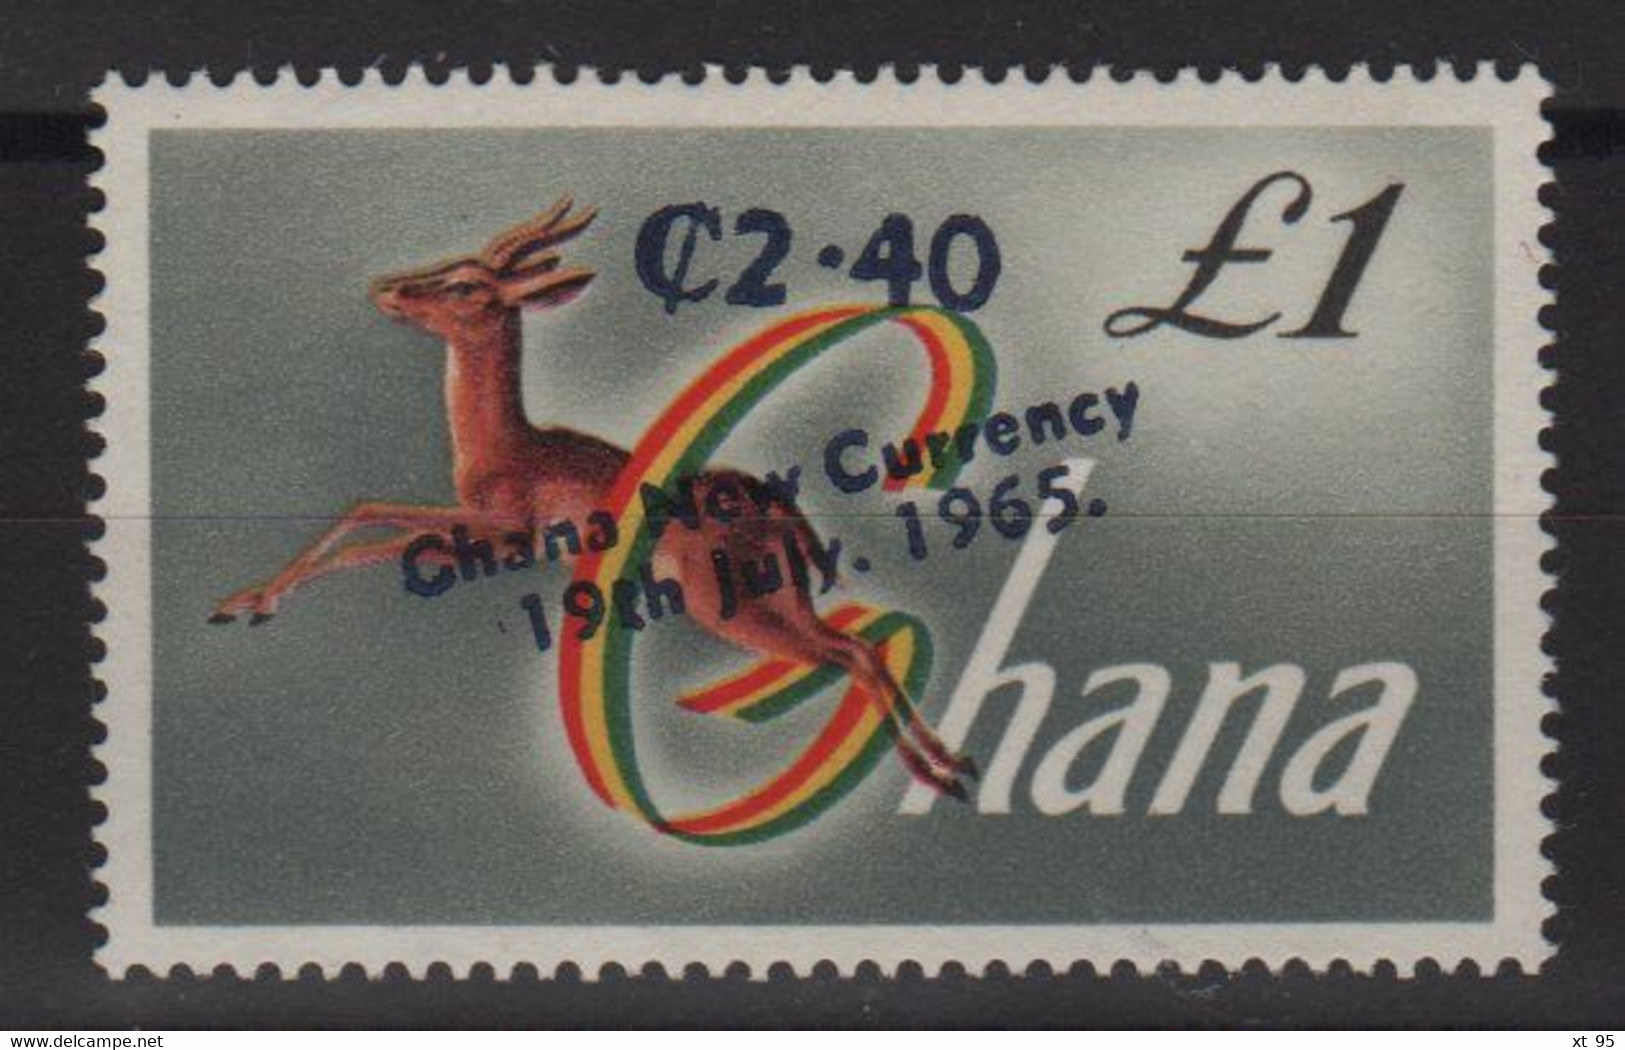 Ghana - N°211 - Faune - Antilope - Cote 9€ - ** Neuf Sans Charniere - Ghana (1957-...)